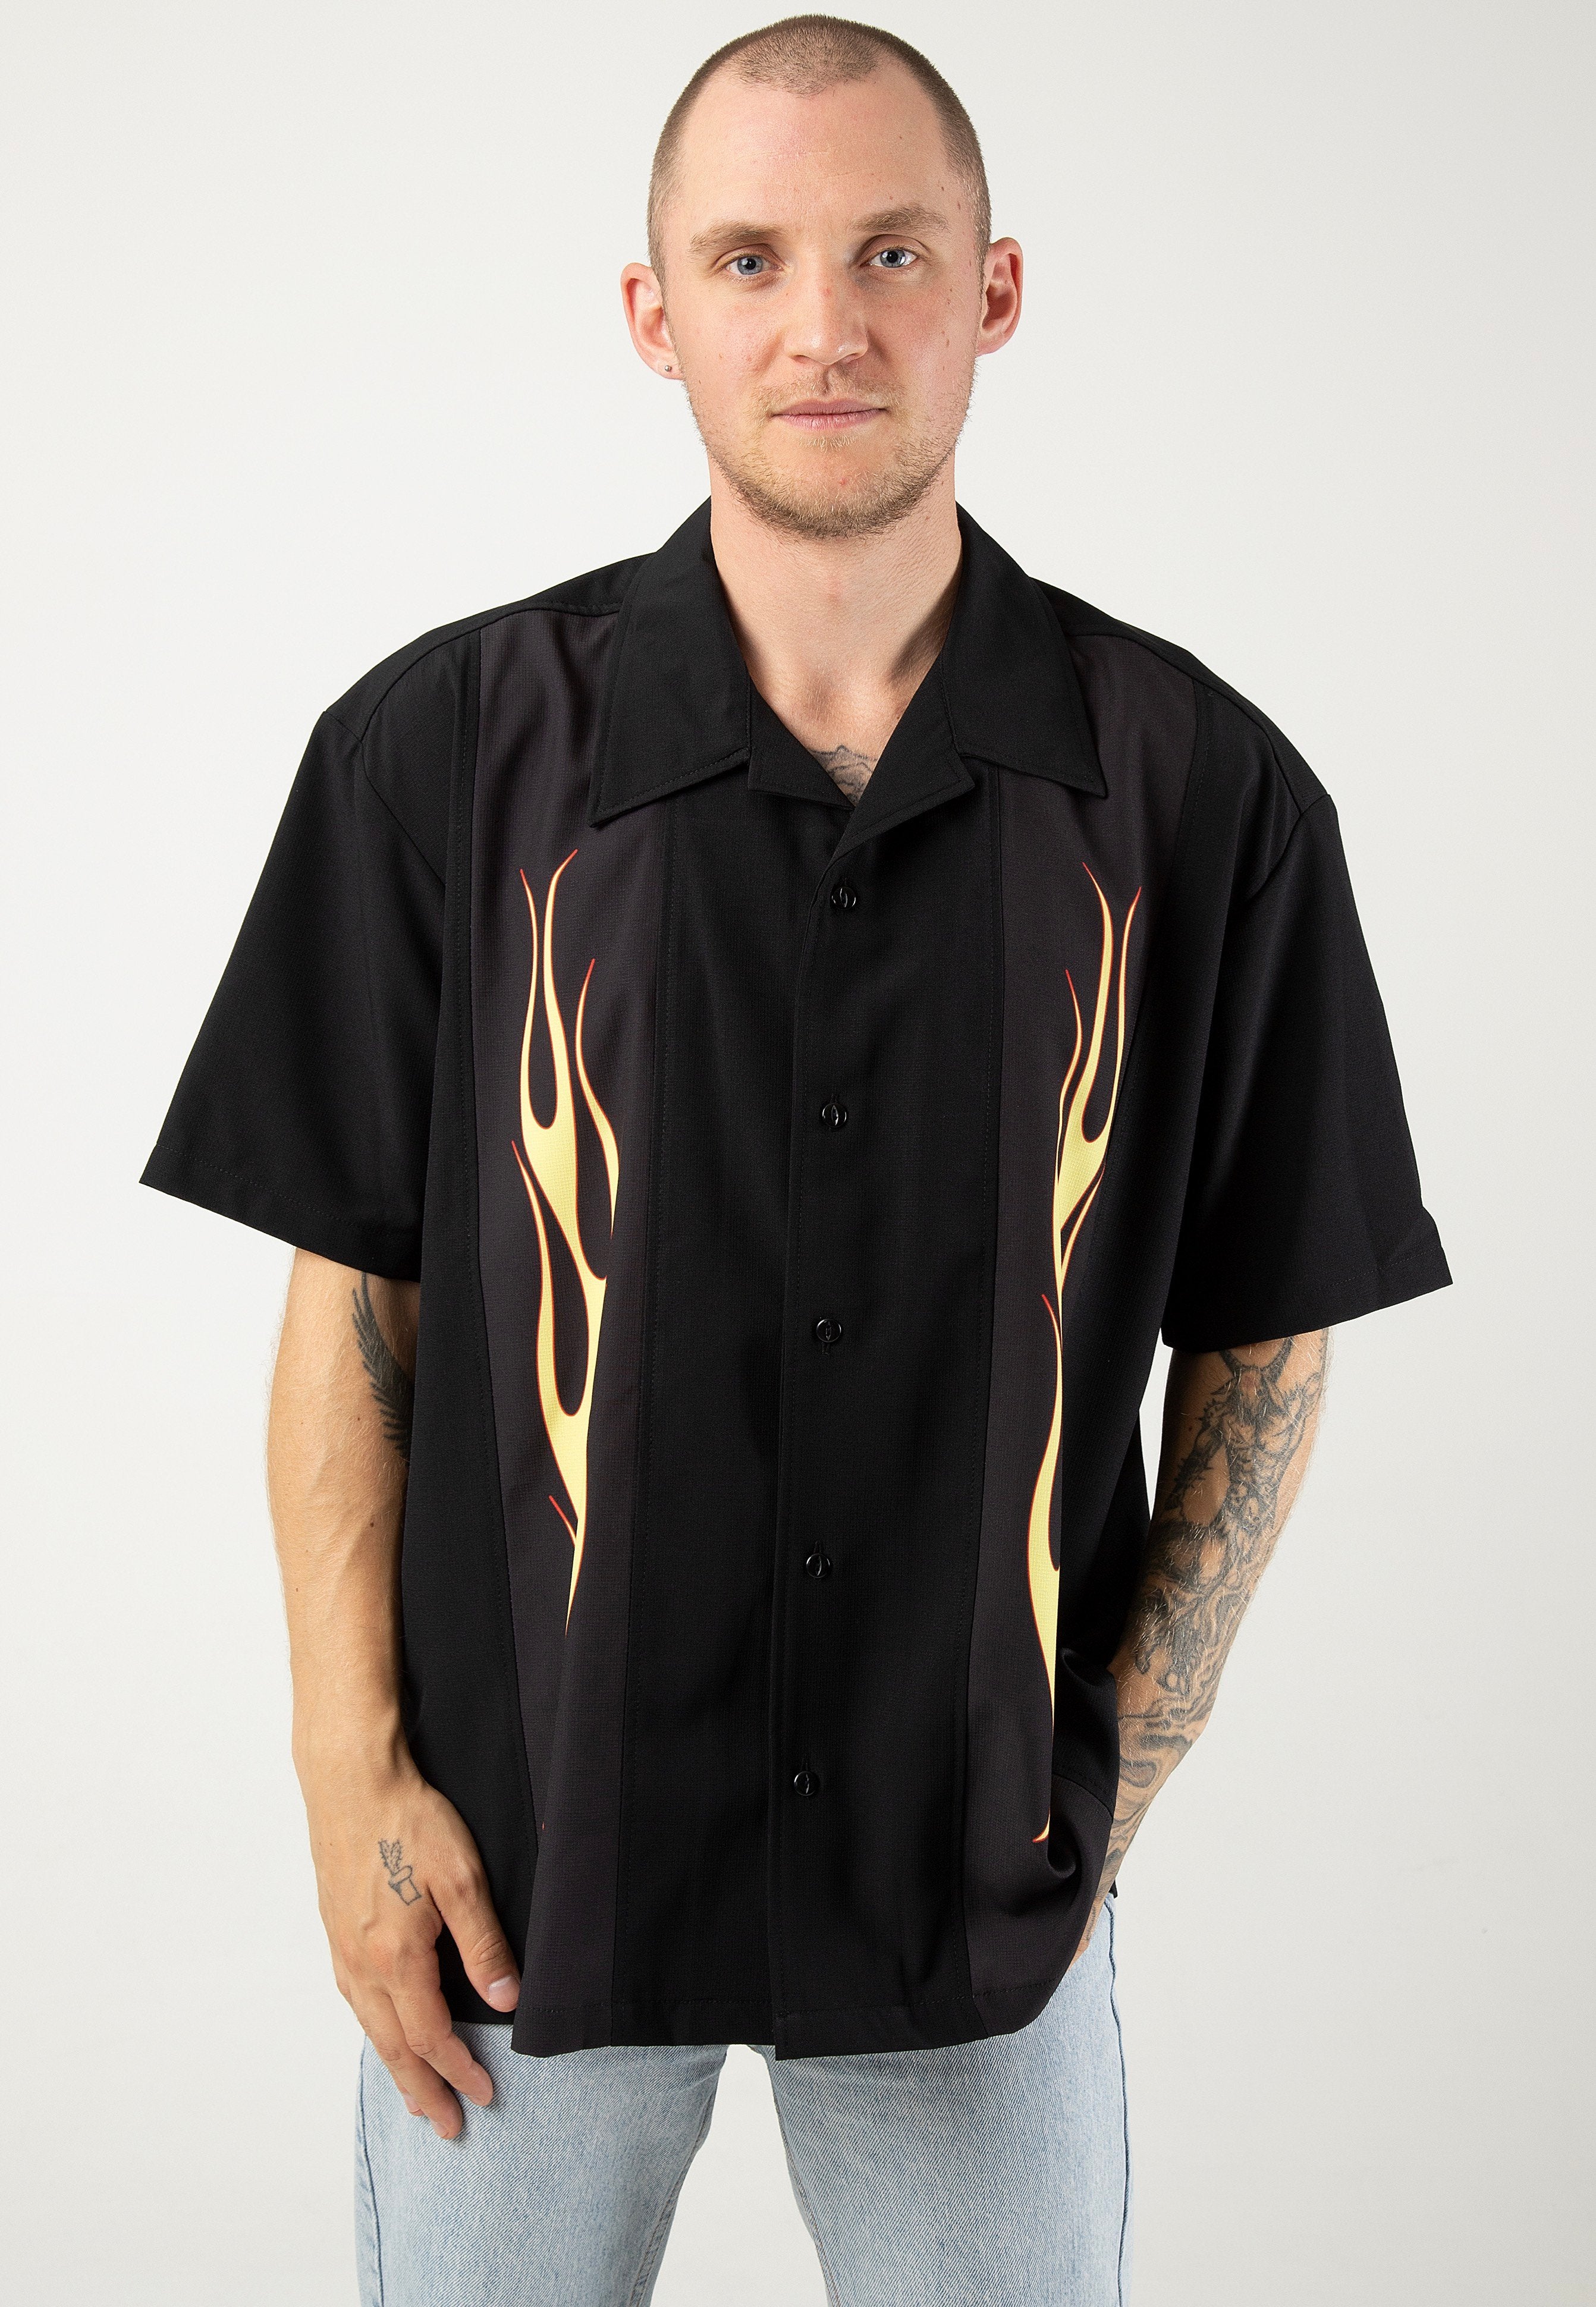 Steady Clothing - Flame N Hot Black - Shirt